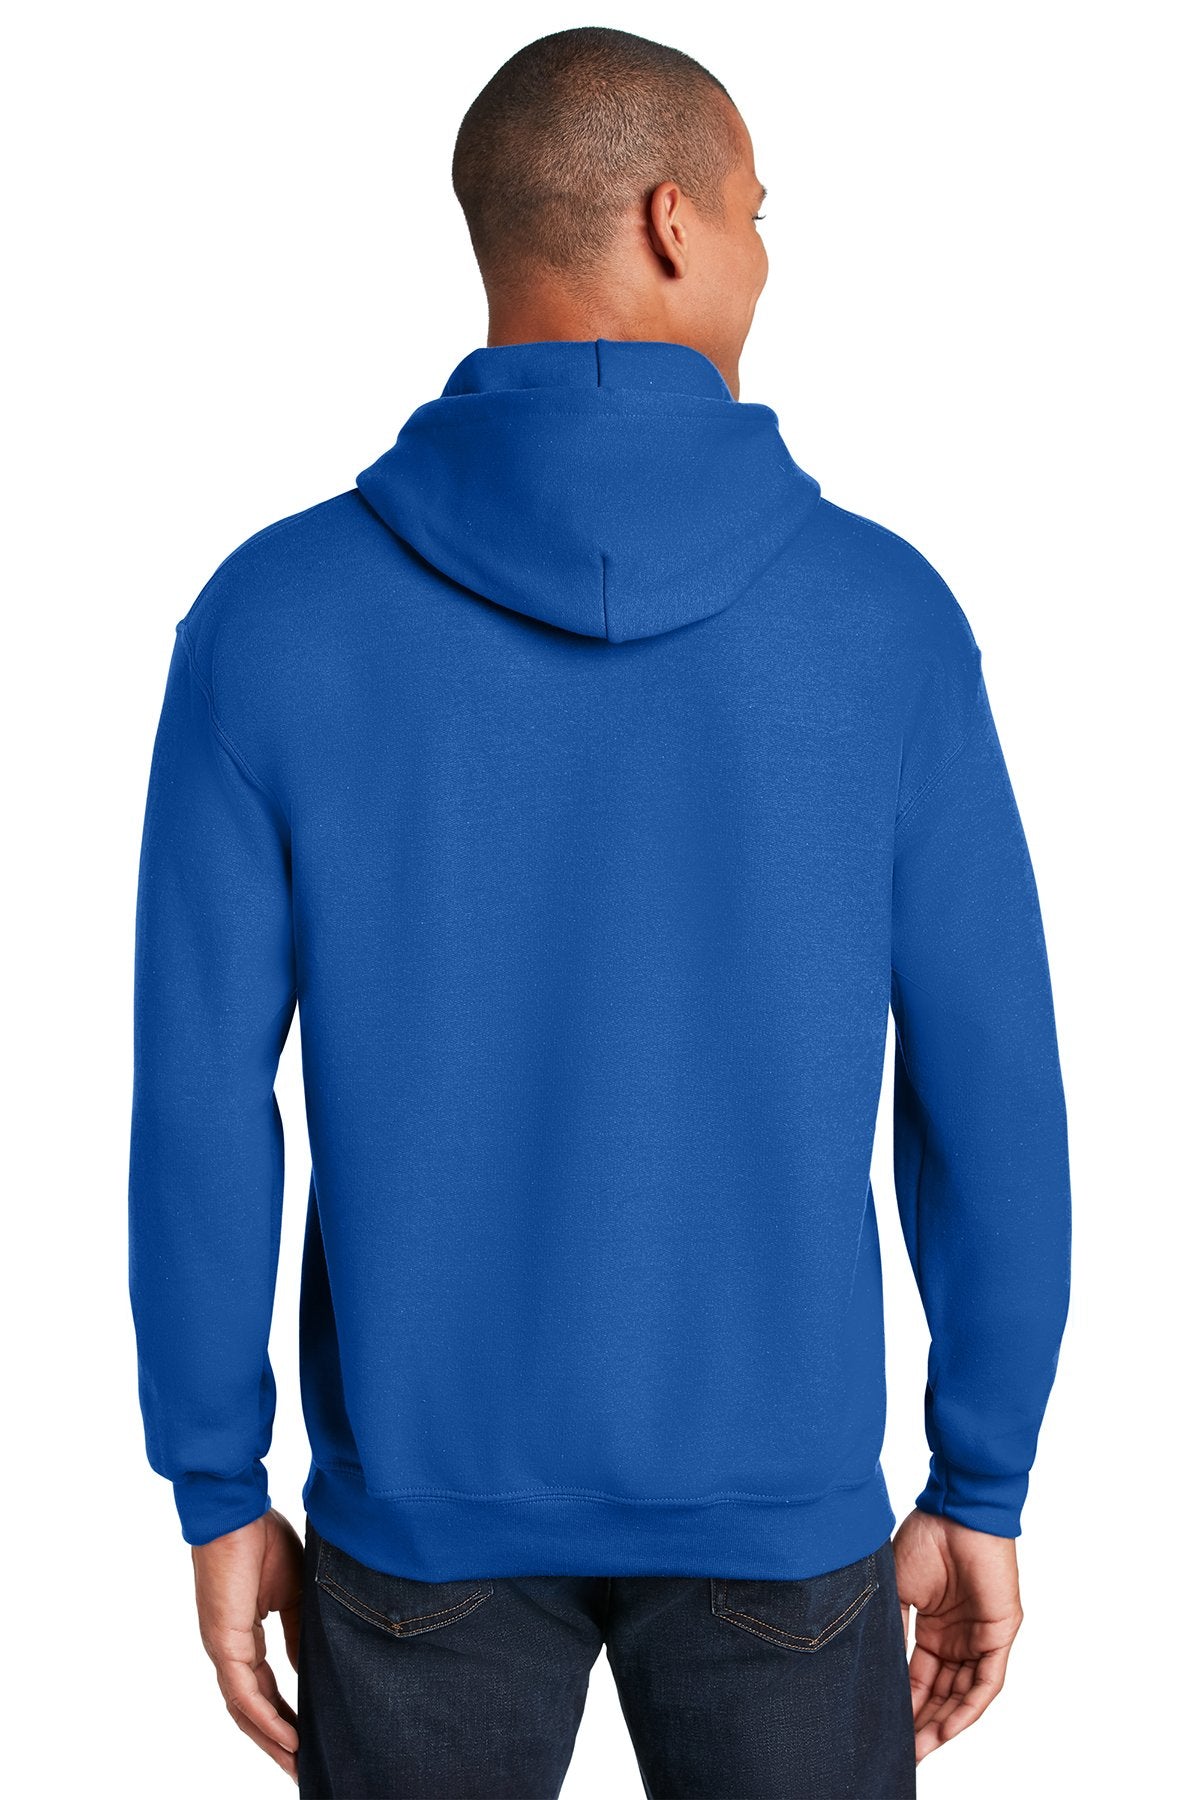 Gildan Heavy Blend Hooded Sweatshirt Royal